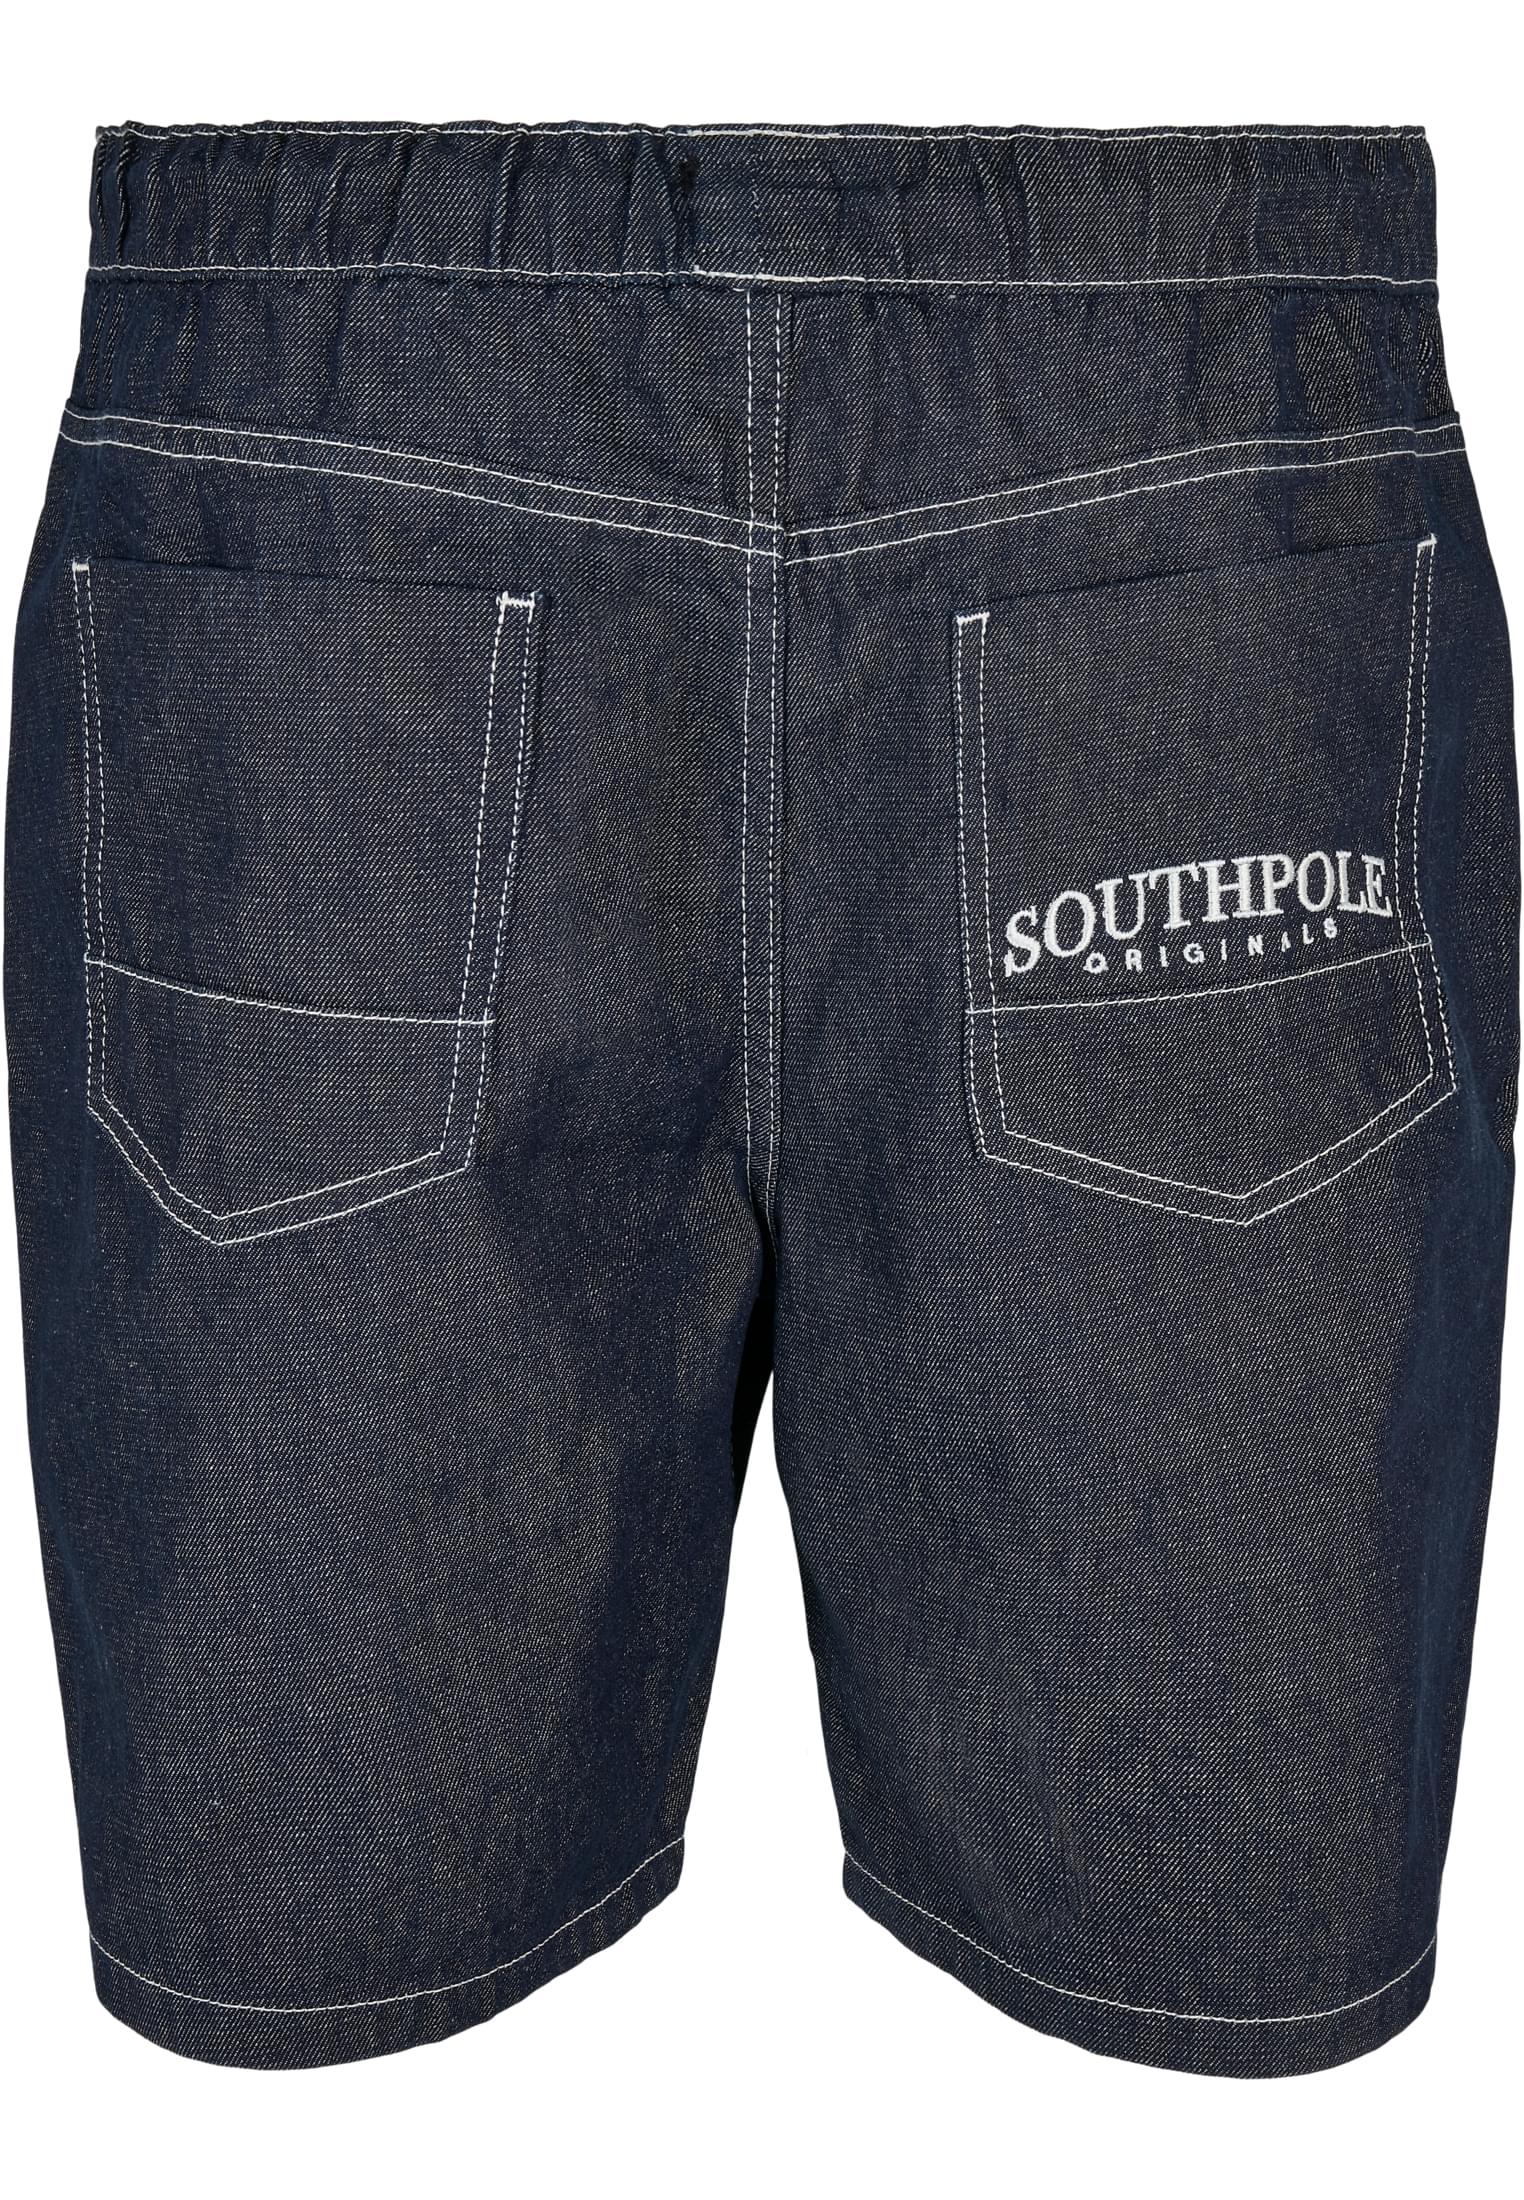 Saisonware Southpole Denim Shorts in Farbe darkblue washed